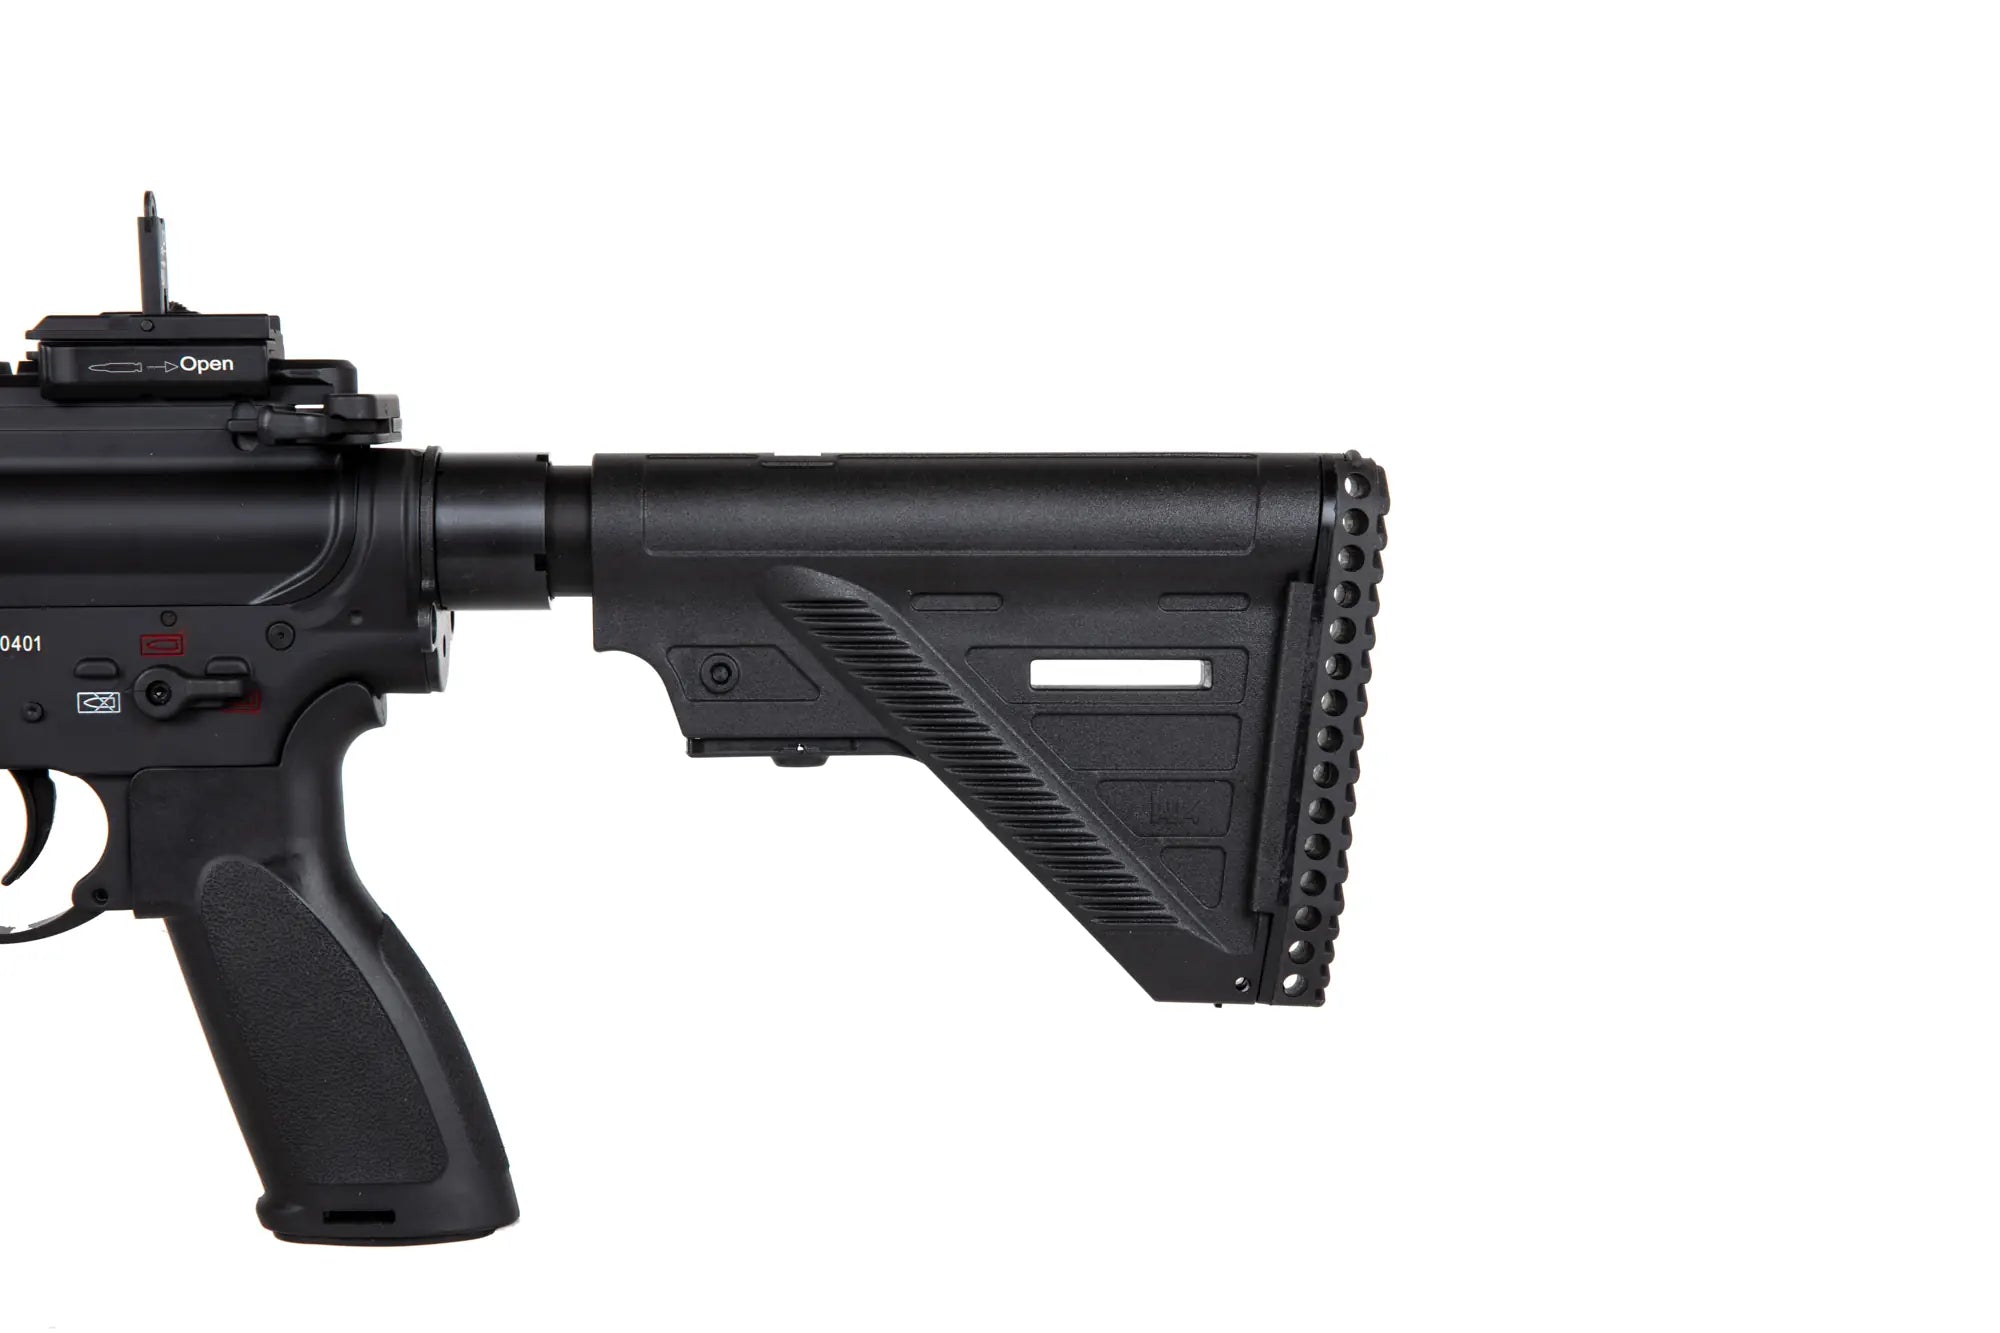  HK416 A5 Gen.3 adjustable stock